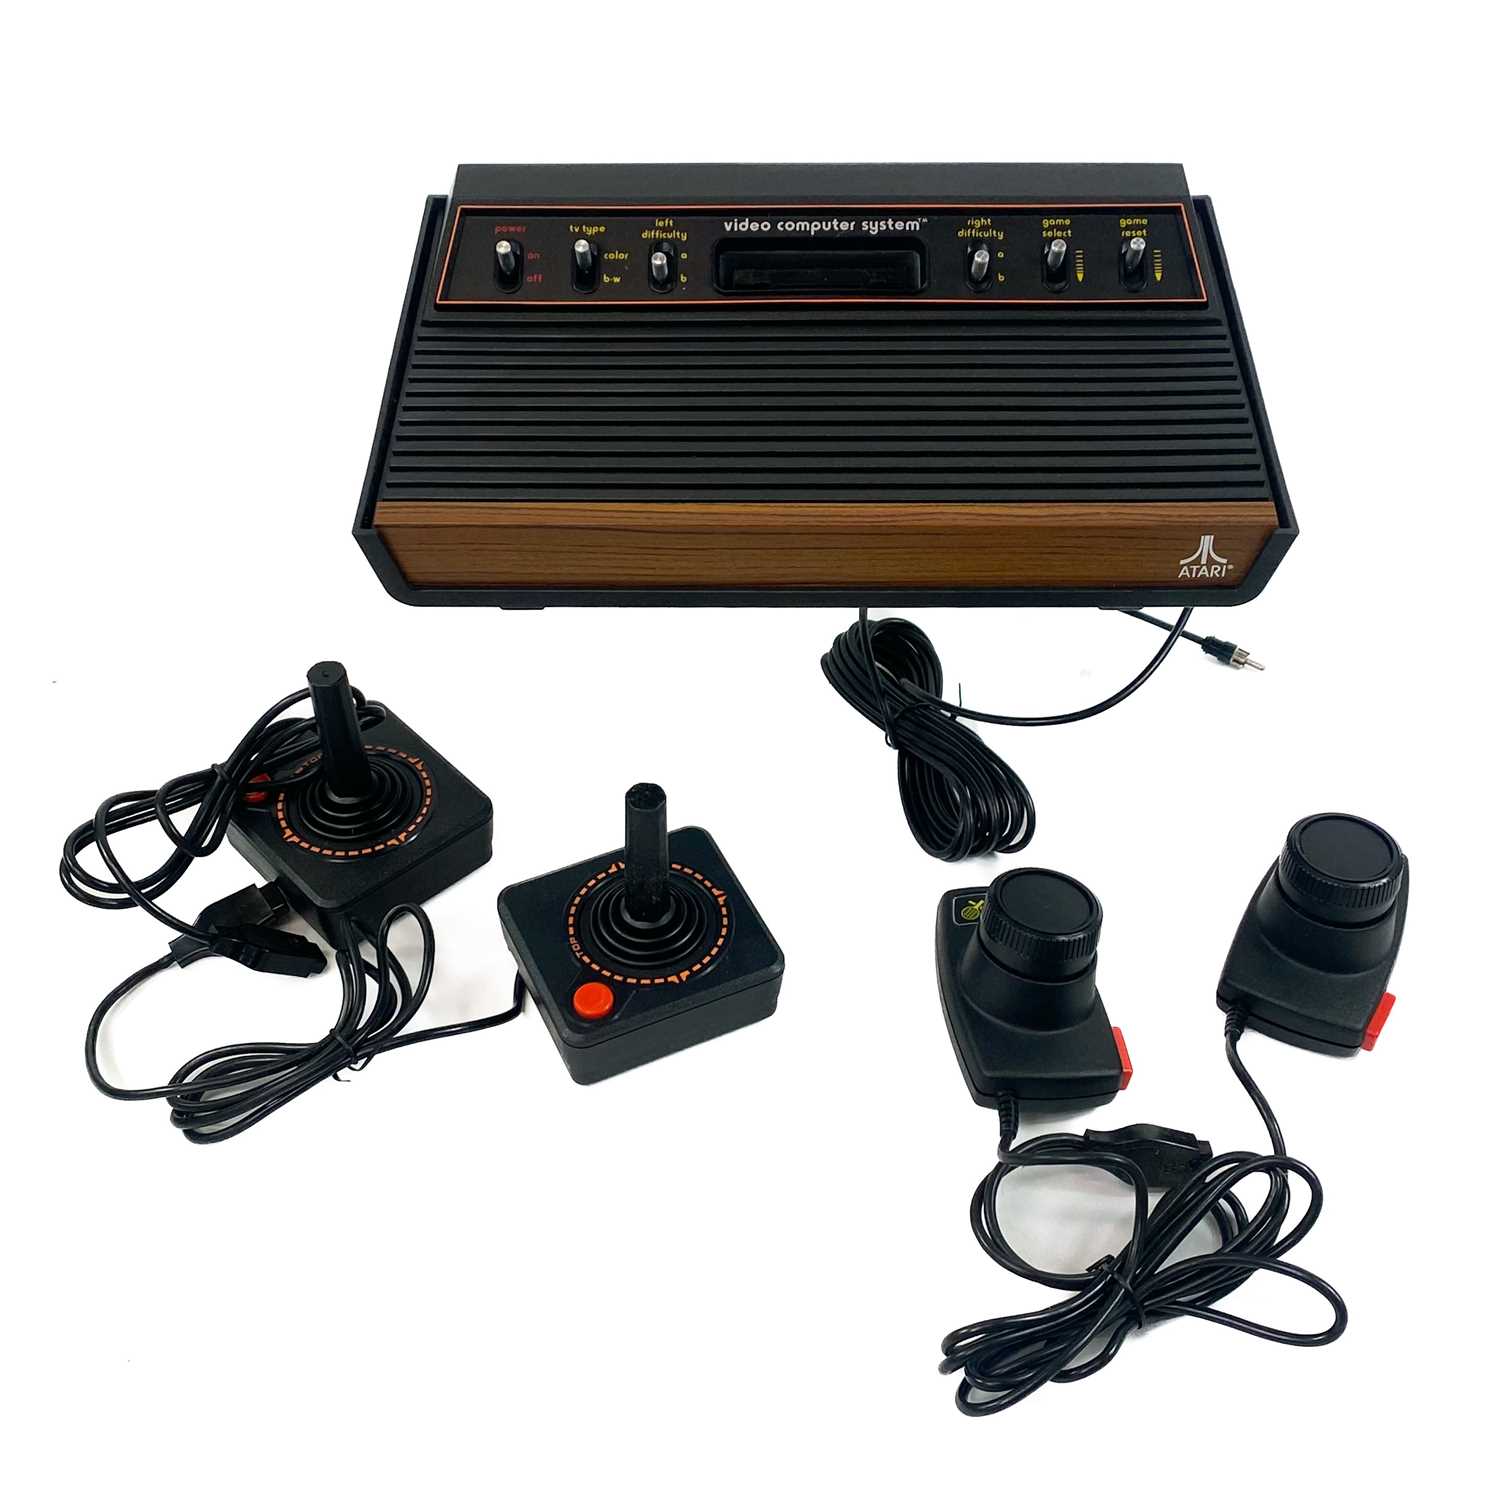 An Atari Video Computer System. - Image 2 of 5